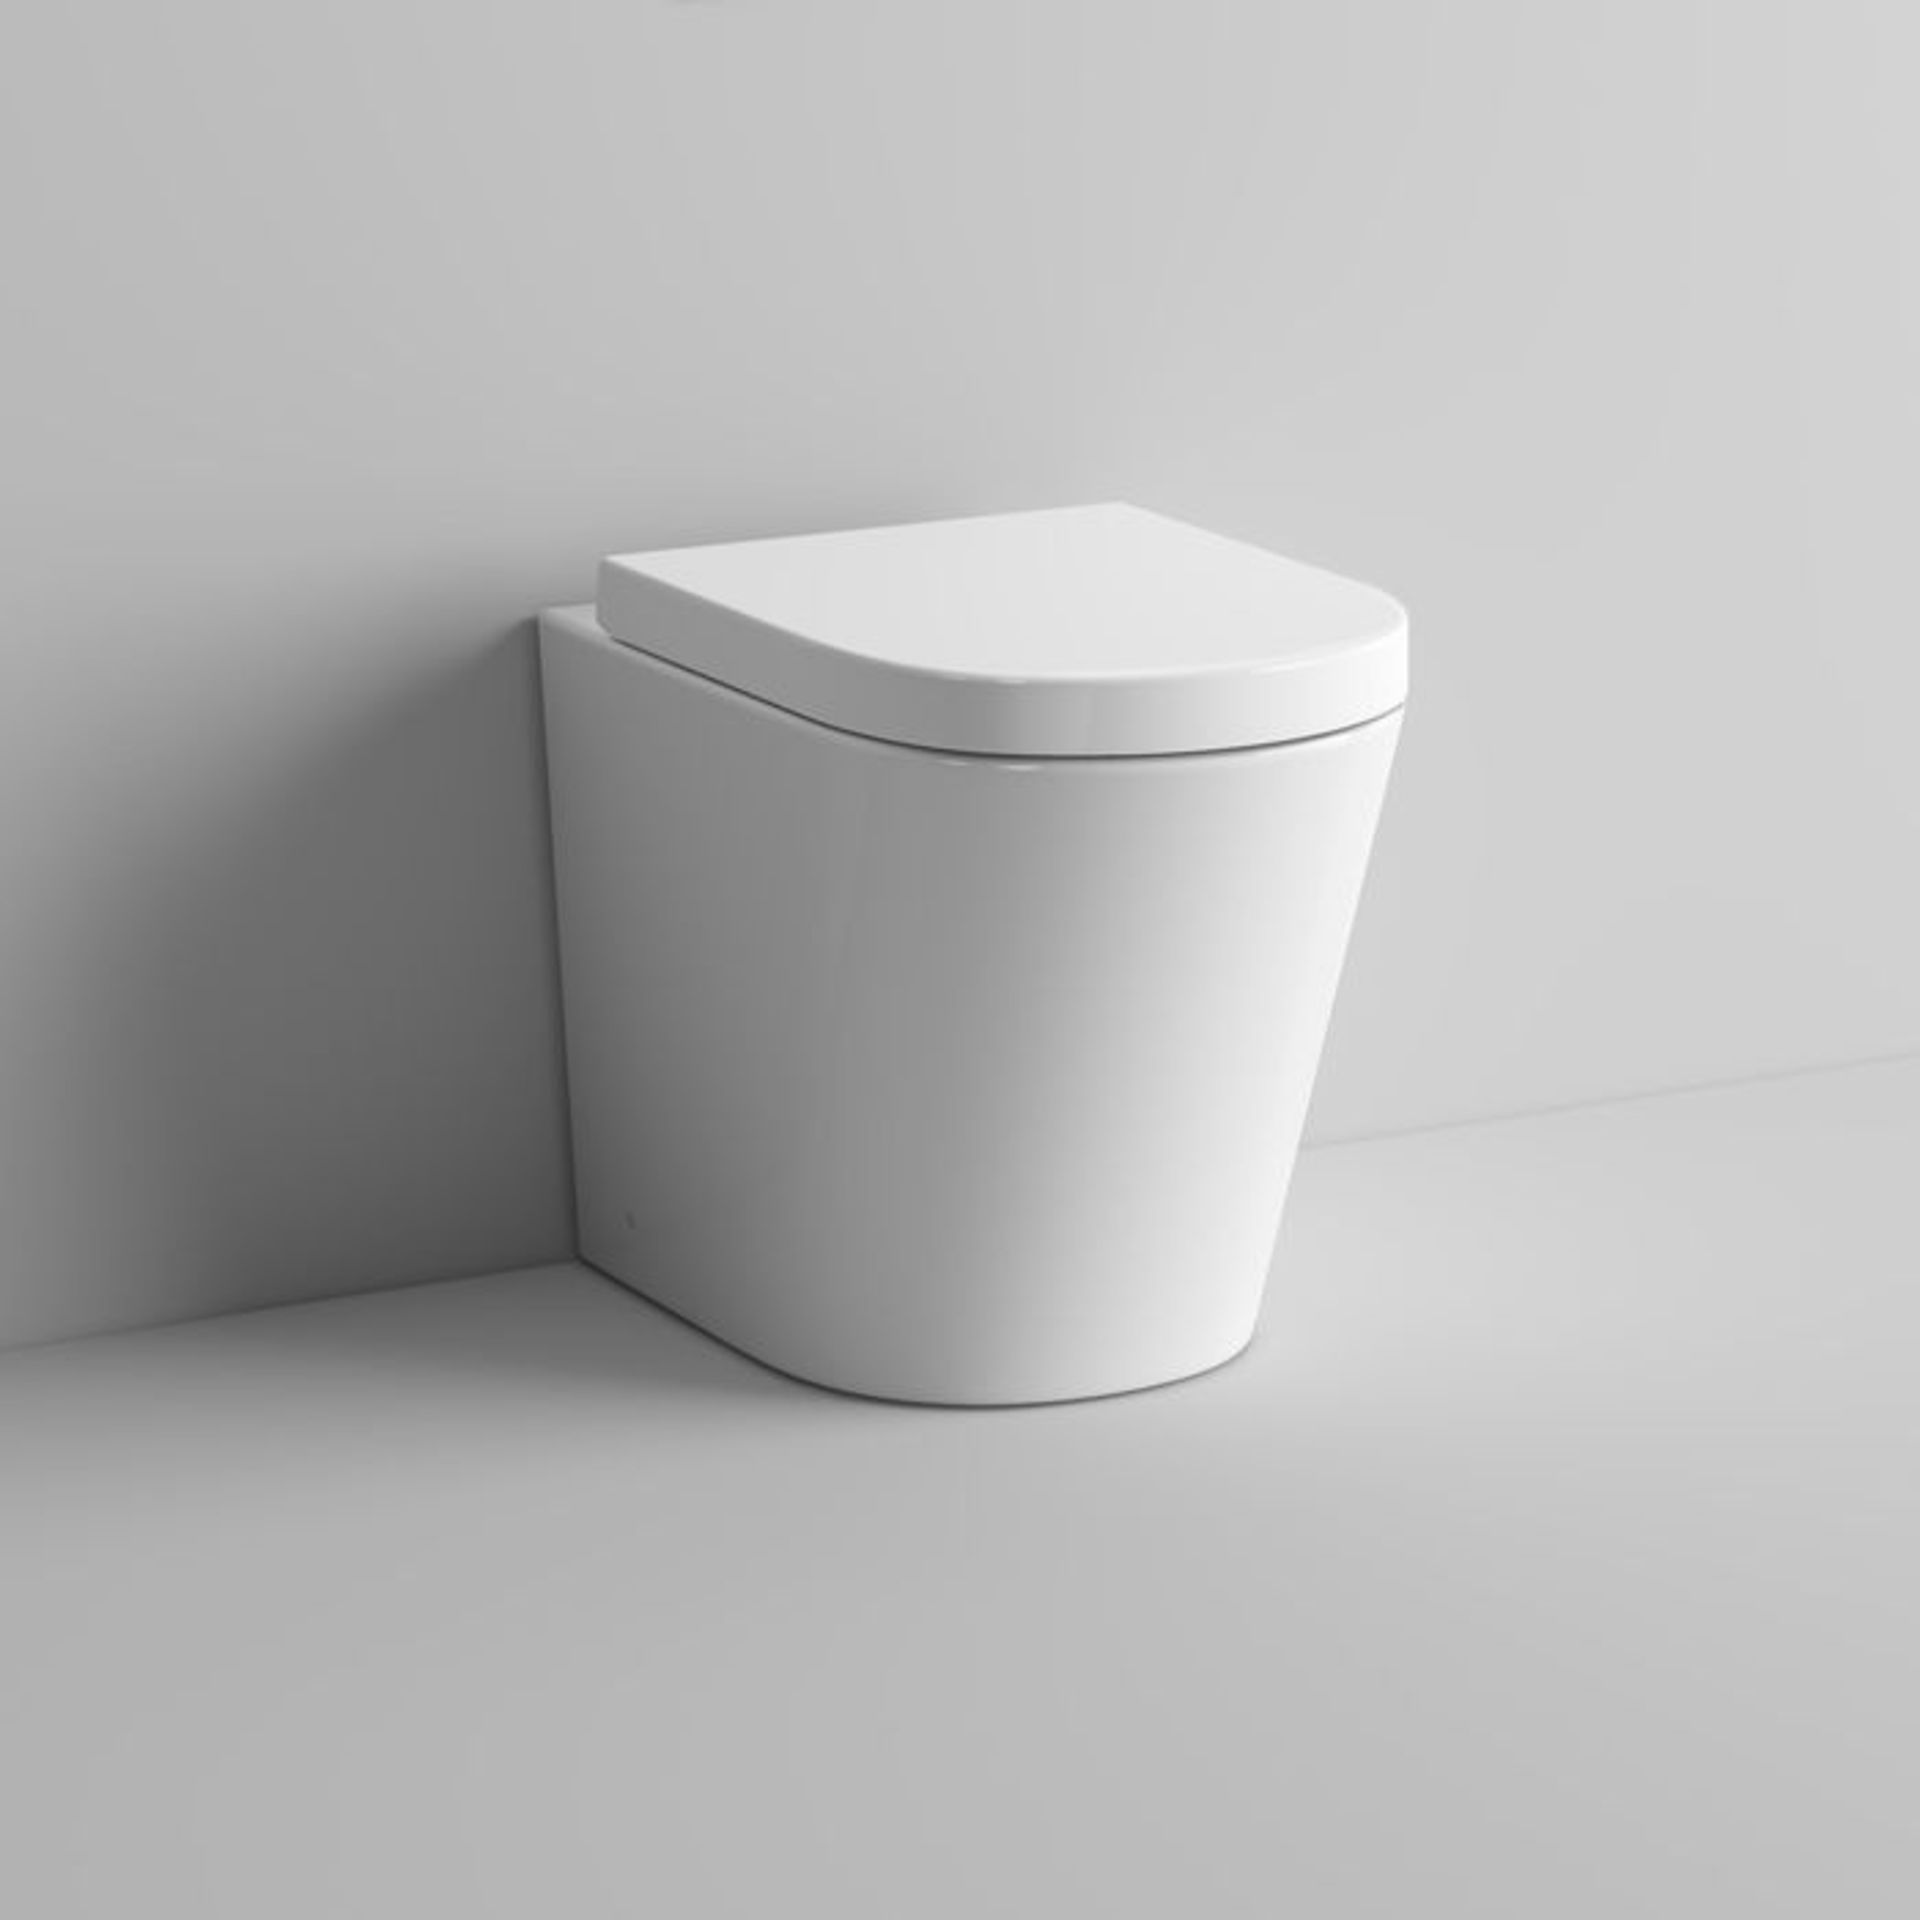 (AL19) Lyon Back to Wall Toilet inc Luxury Soft Close Seat. Our Lyon back to wall toilet is made - Image 3 of 4